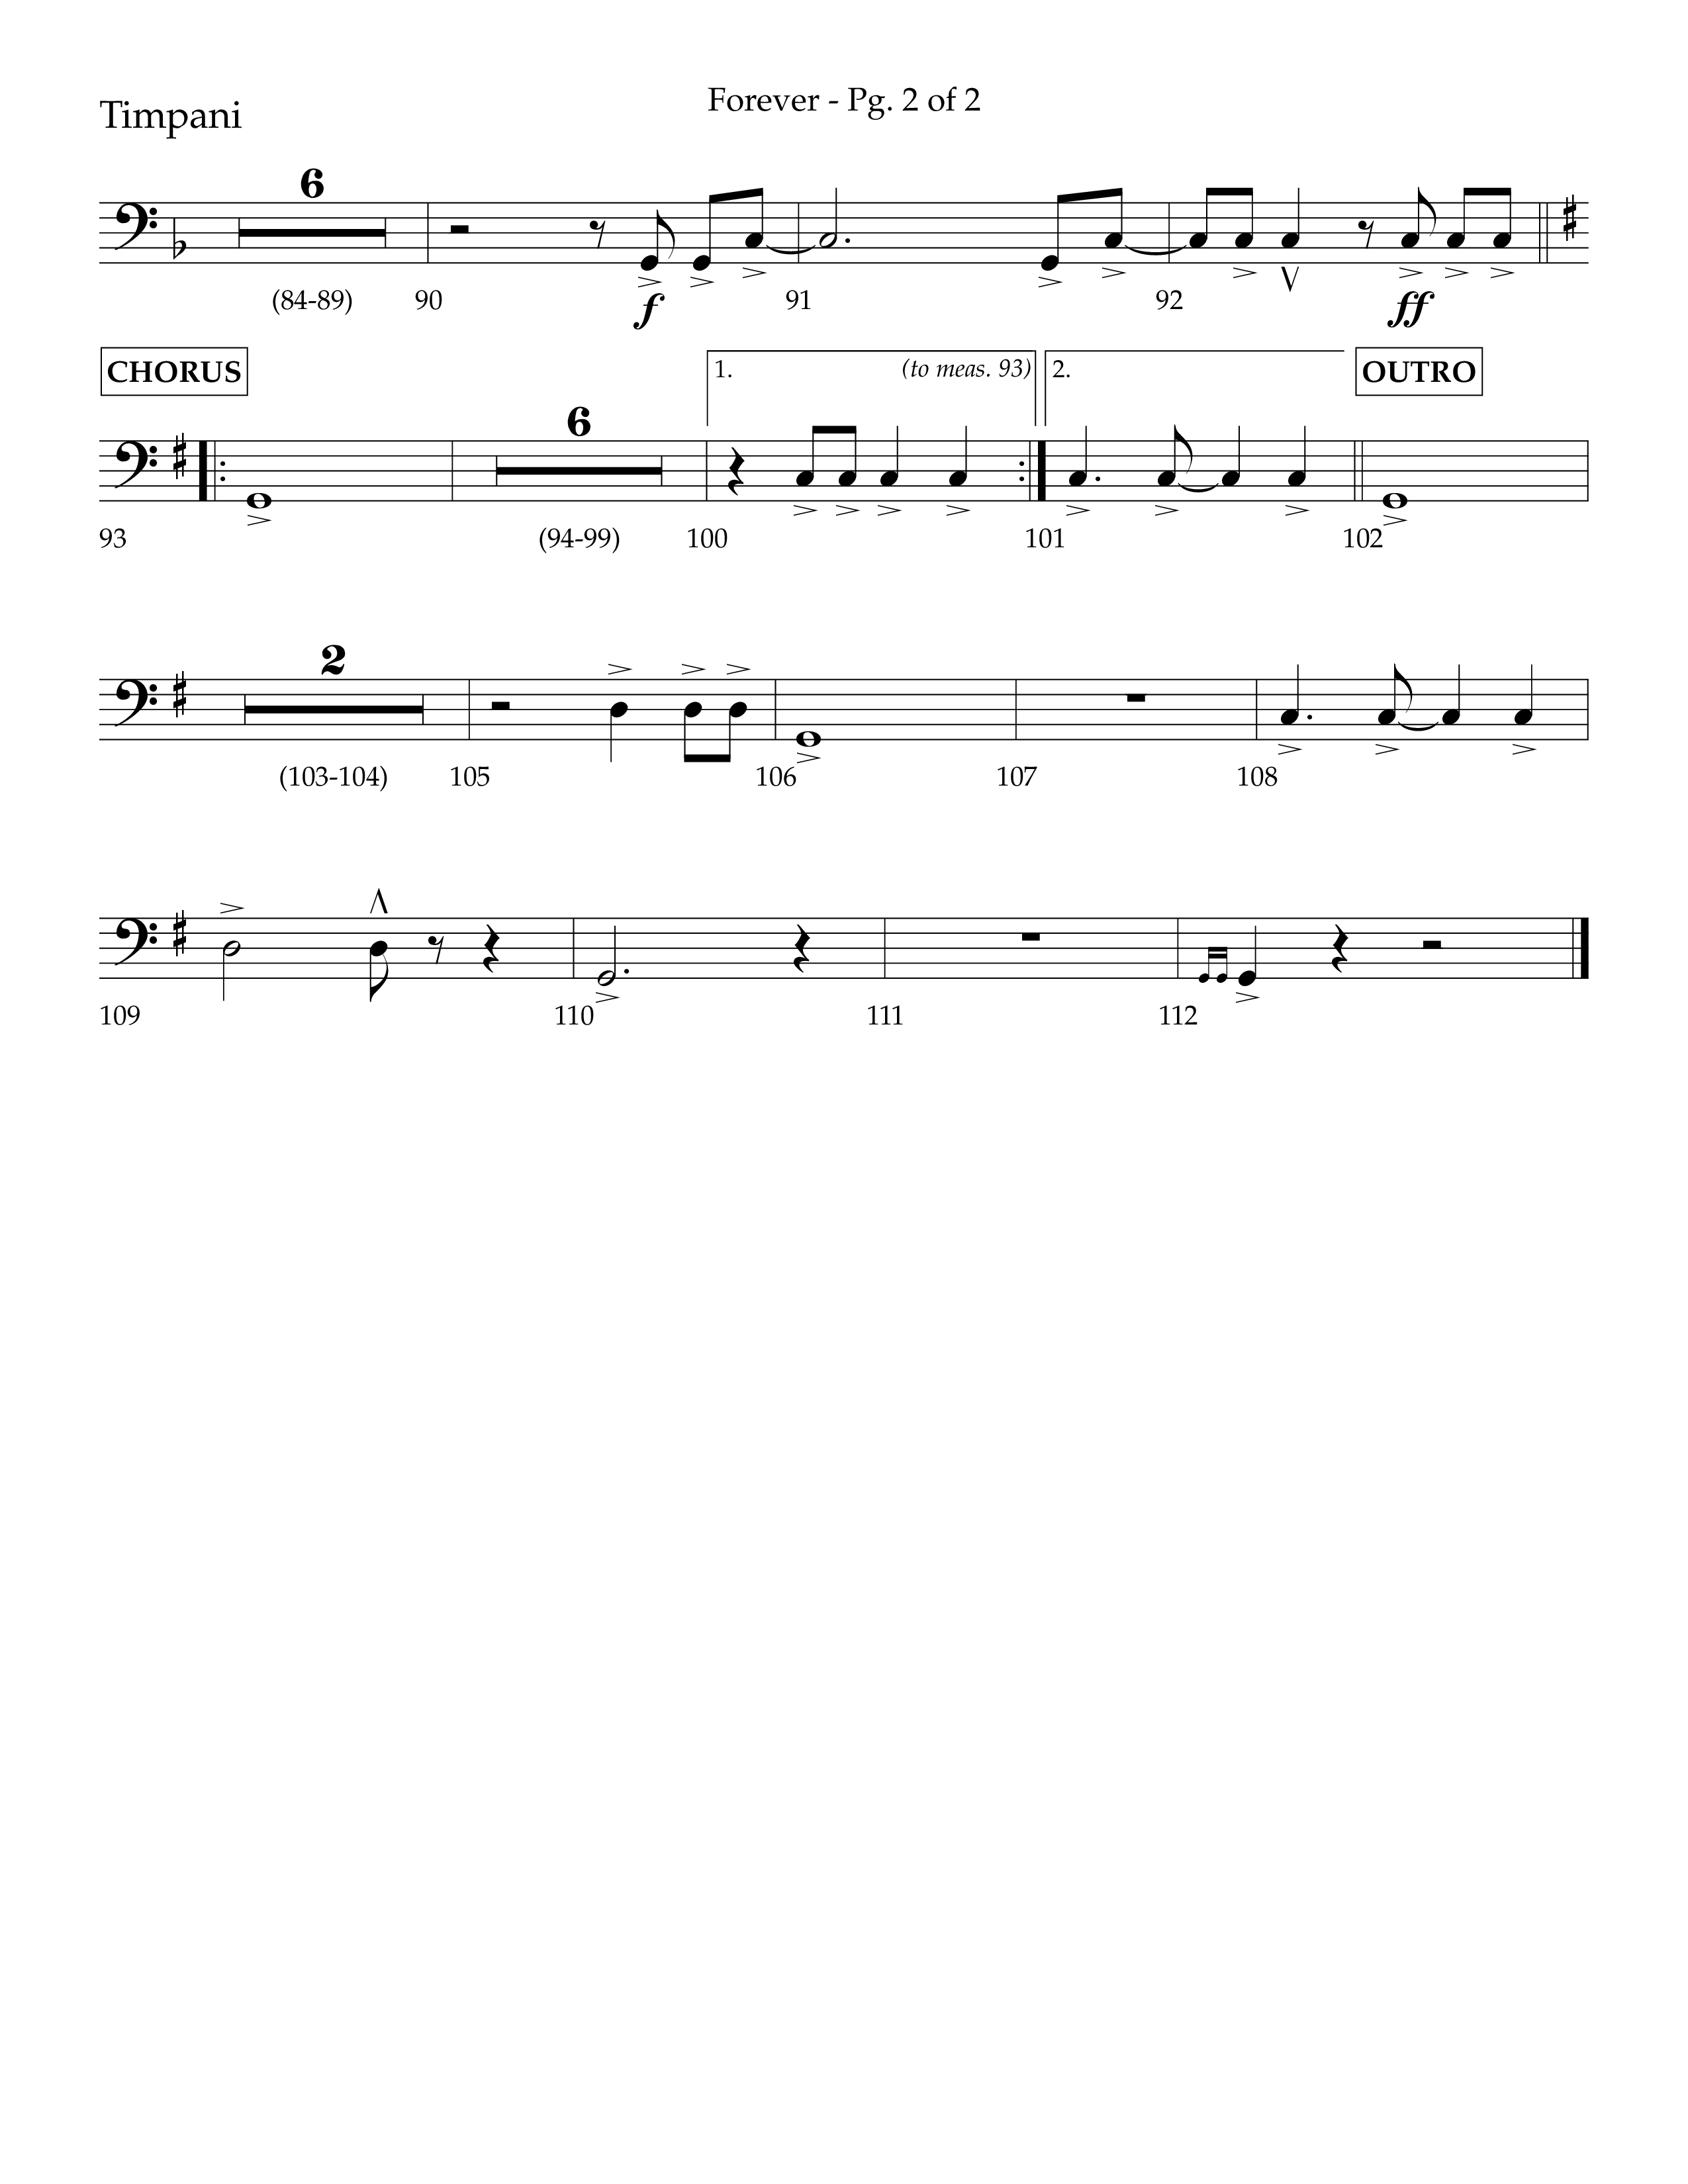 Forever (with Sing Praise) (Choral Anthem SATB) Timpani (Lifeway Choral / Arr. Danny Zaloudik)